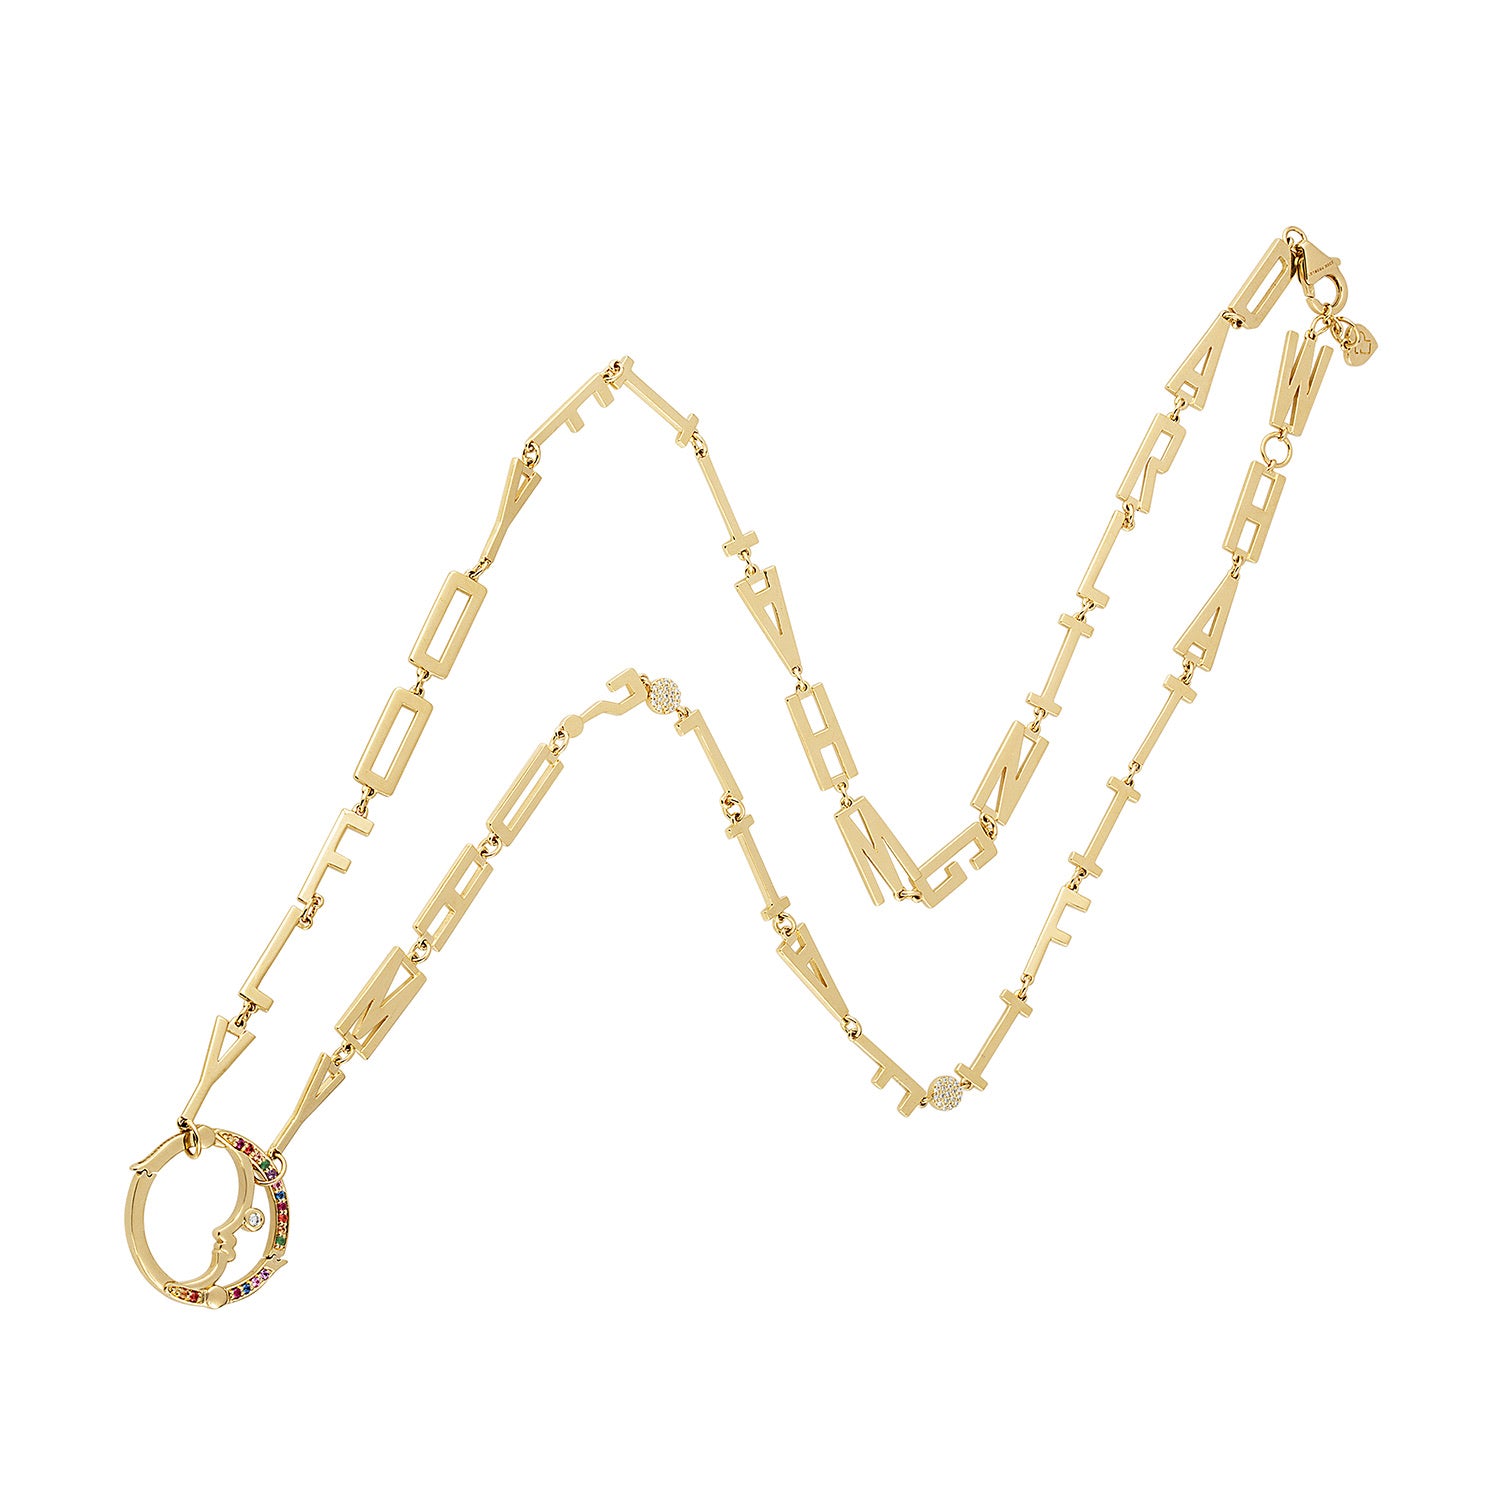 Golden Mantra Necklaces